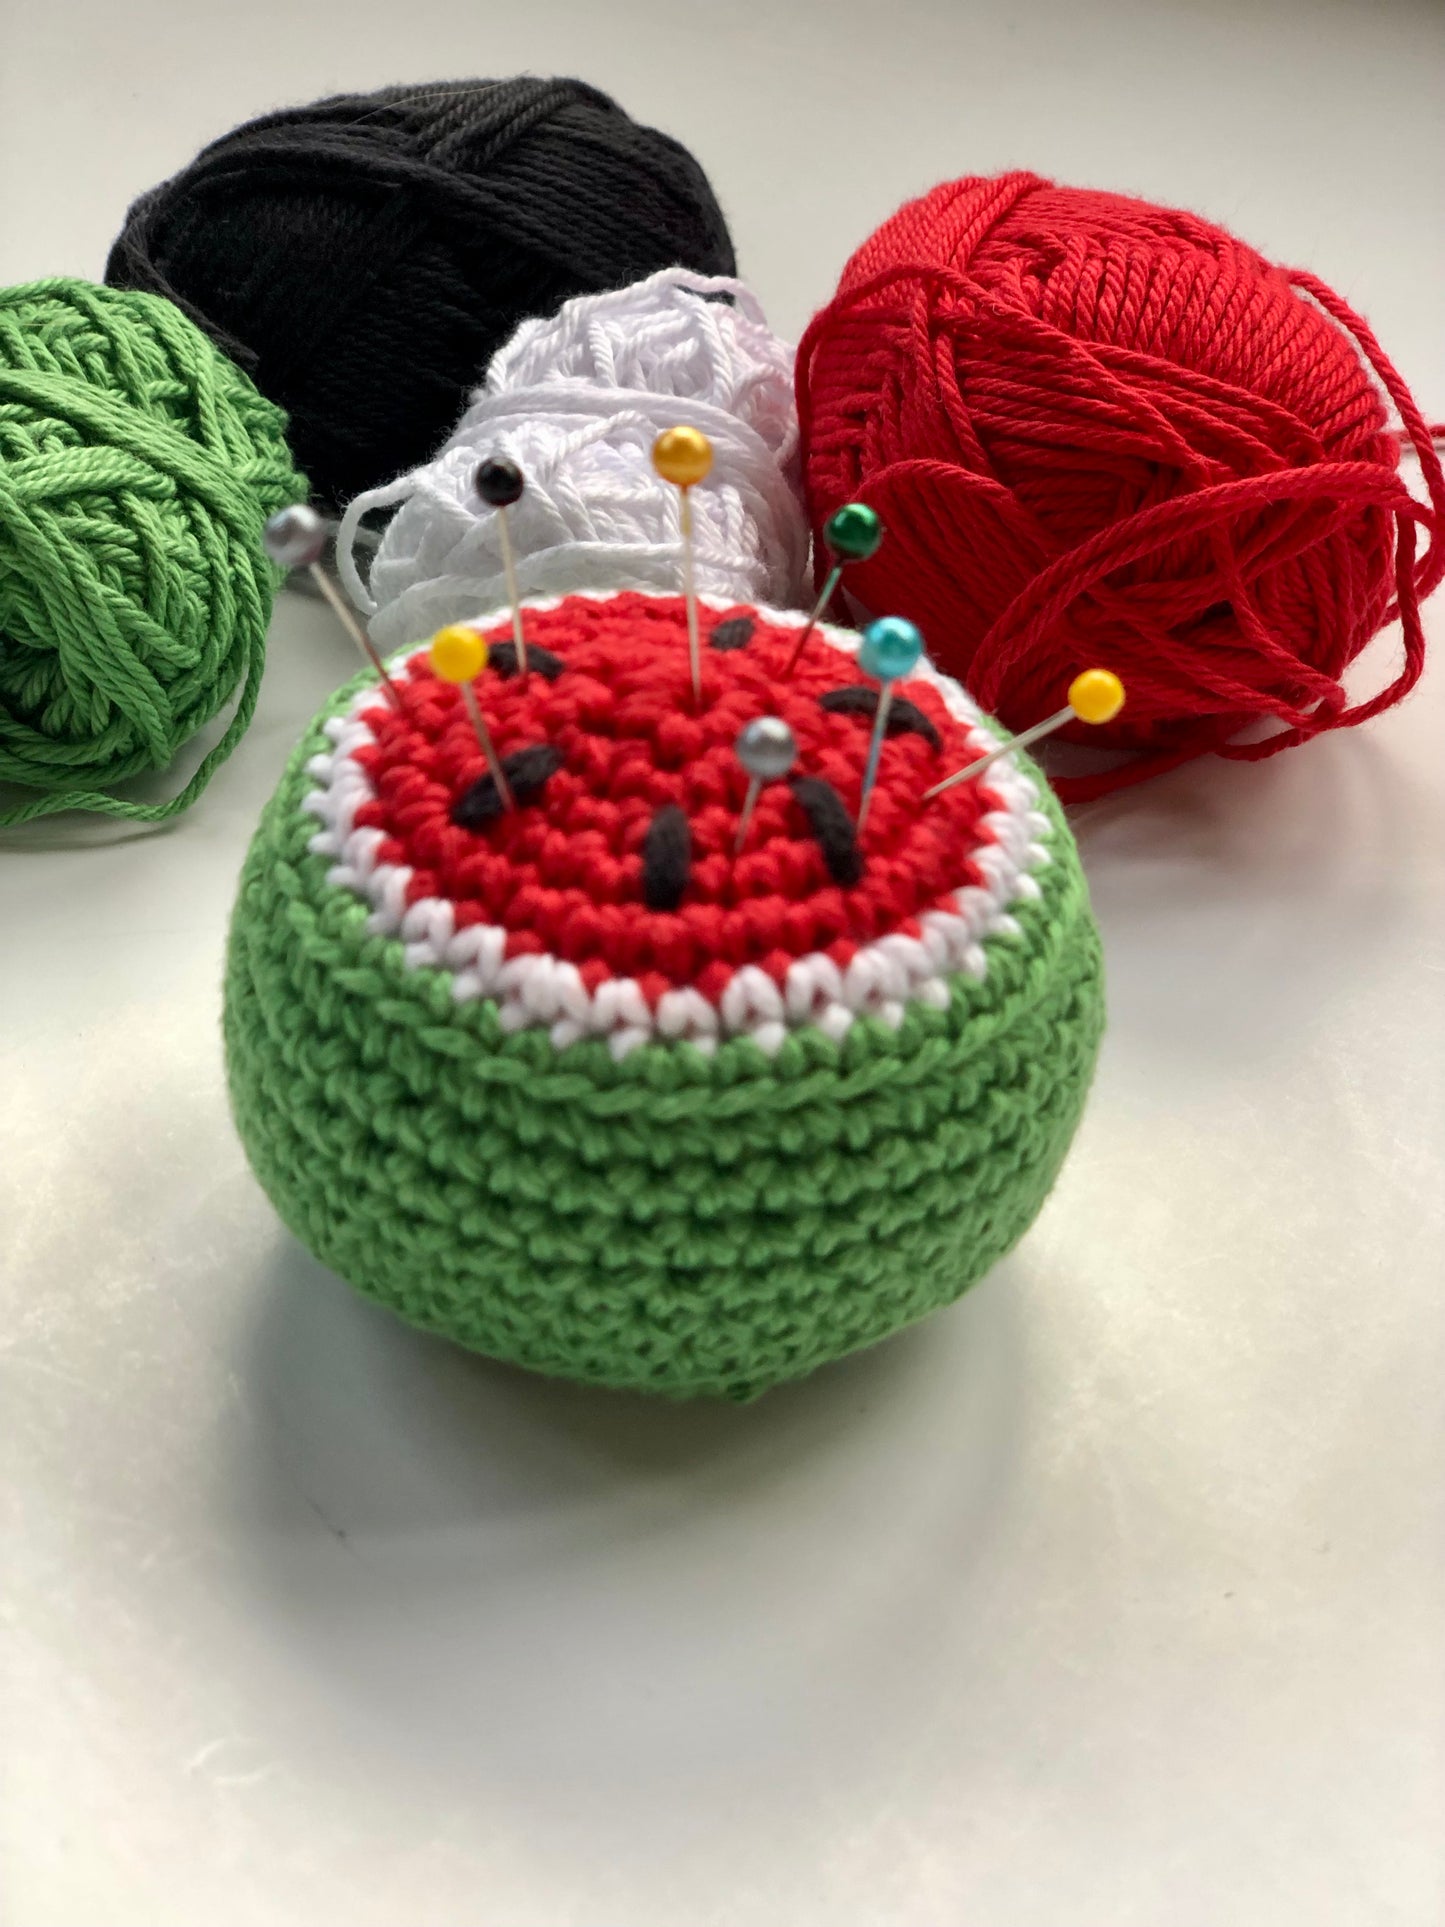 Pin Cushion Crochet Class - Saturday 13th July 10am